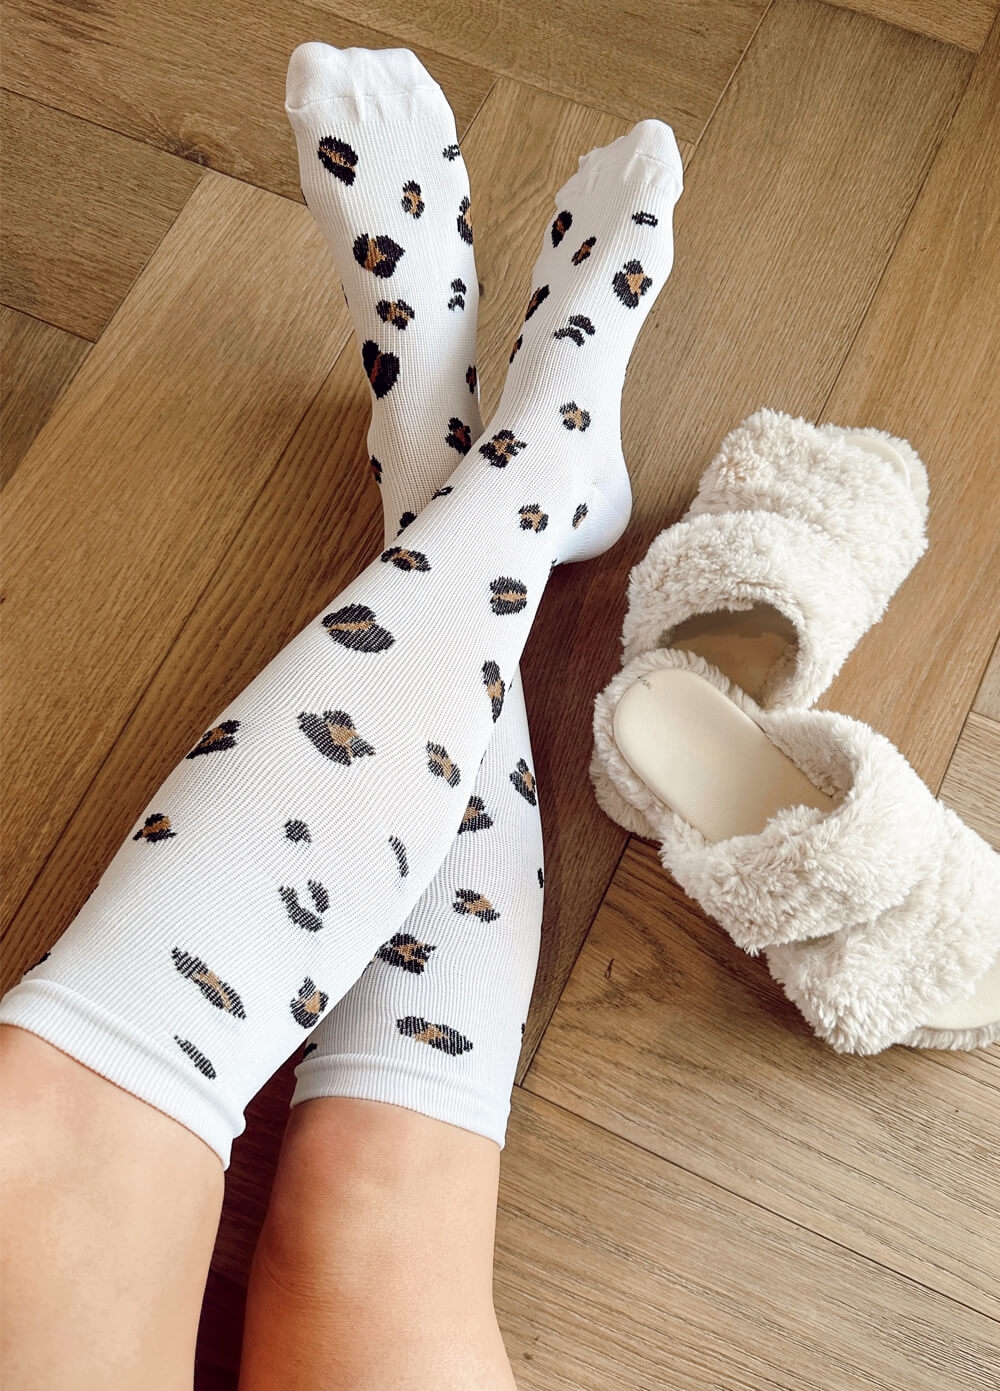 Mama Sox - Excite Compression Socks in White Leopard